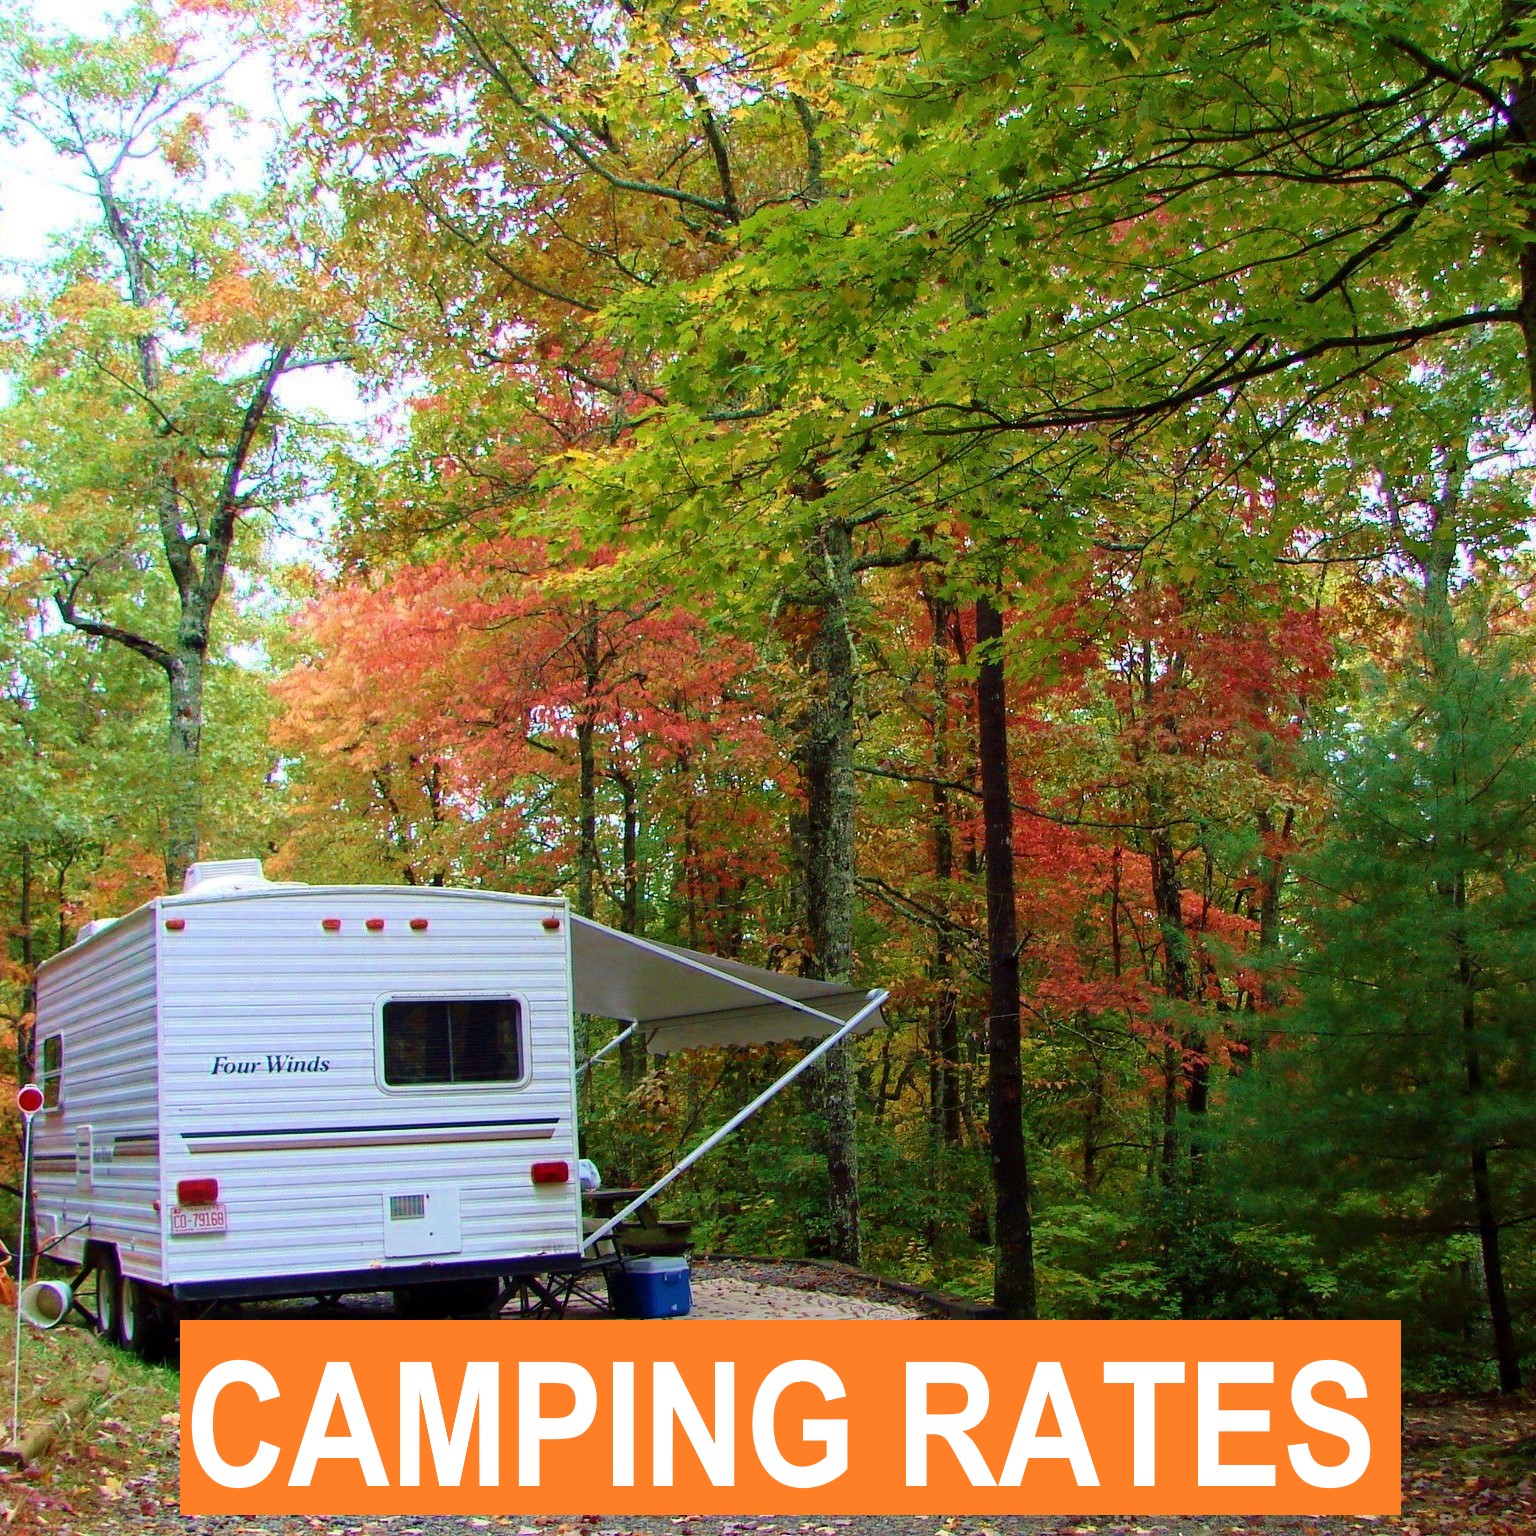 Campting rates